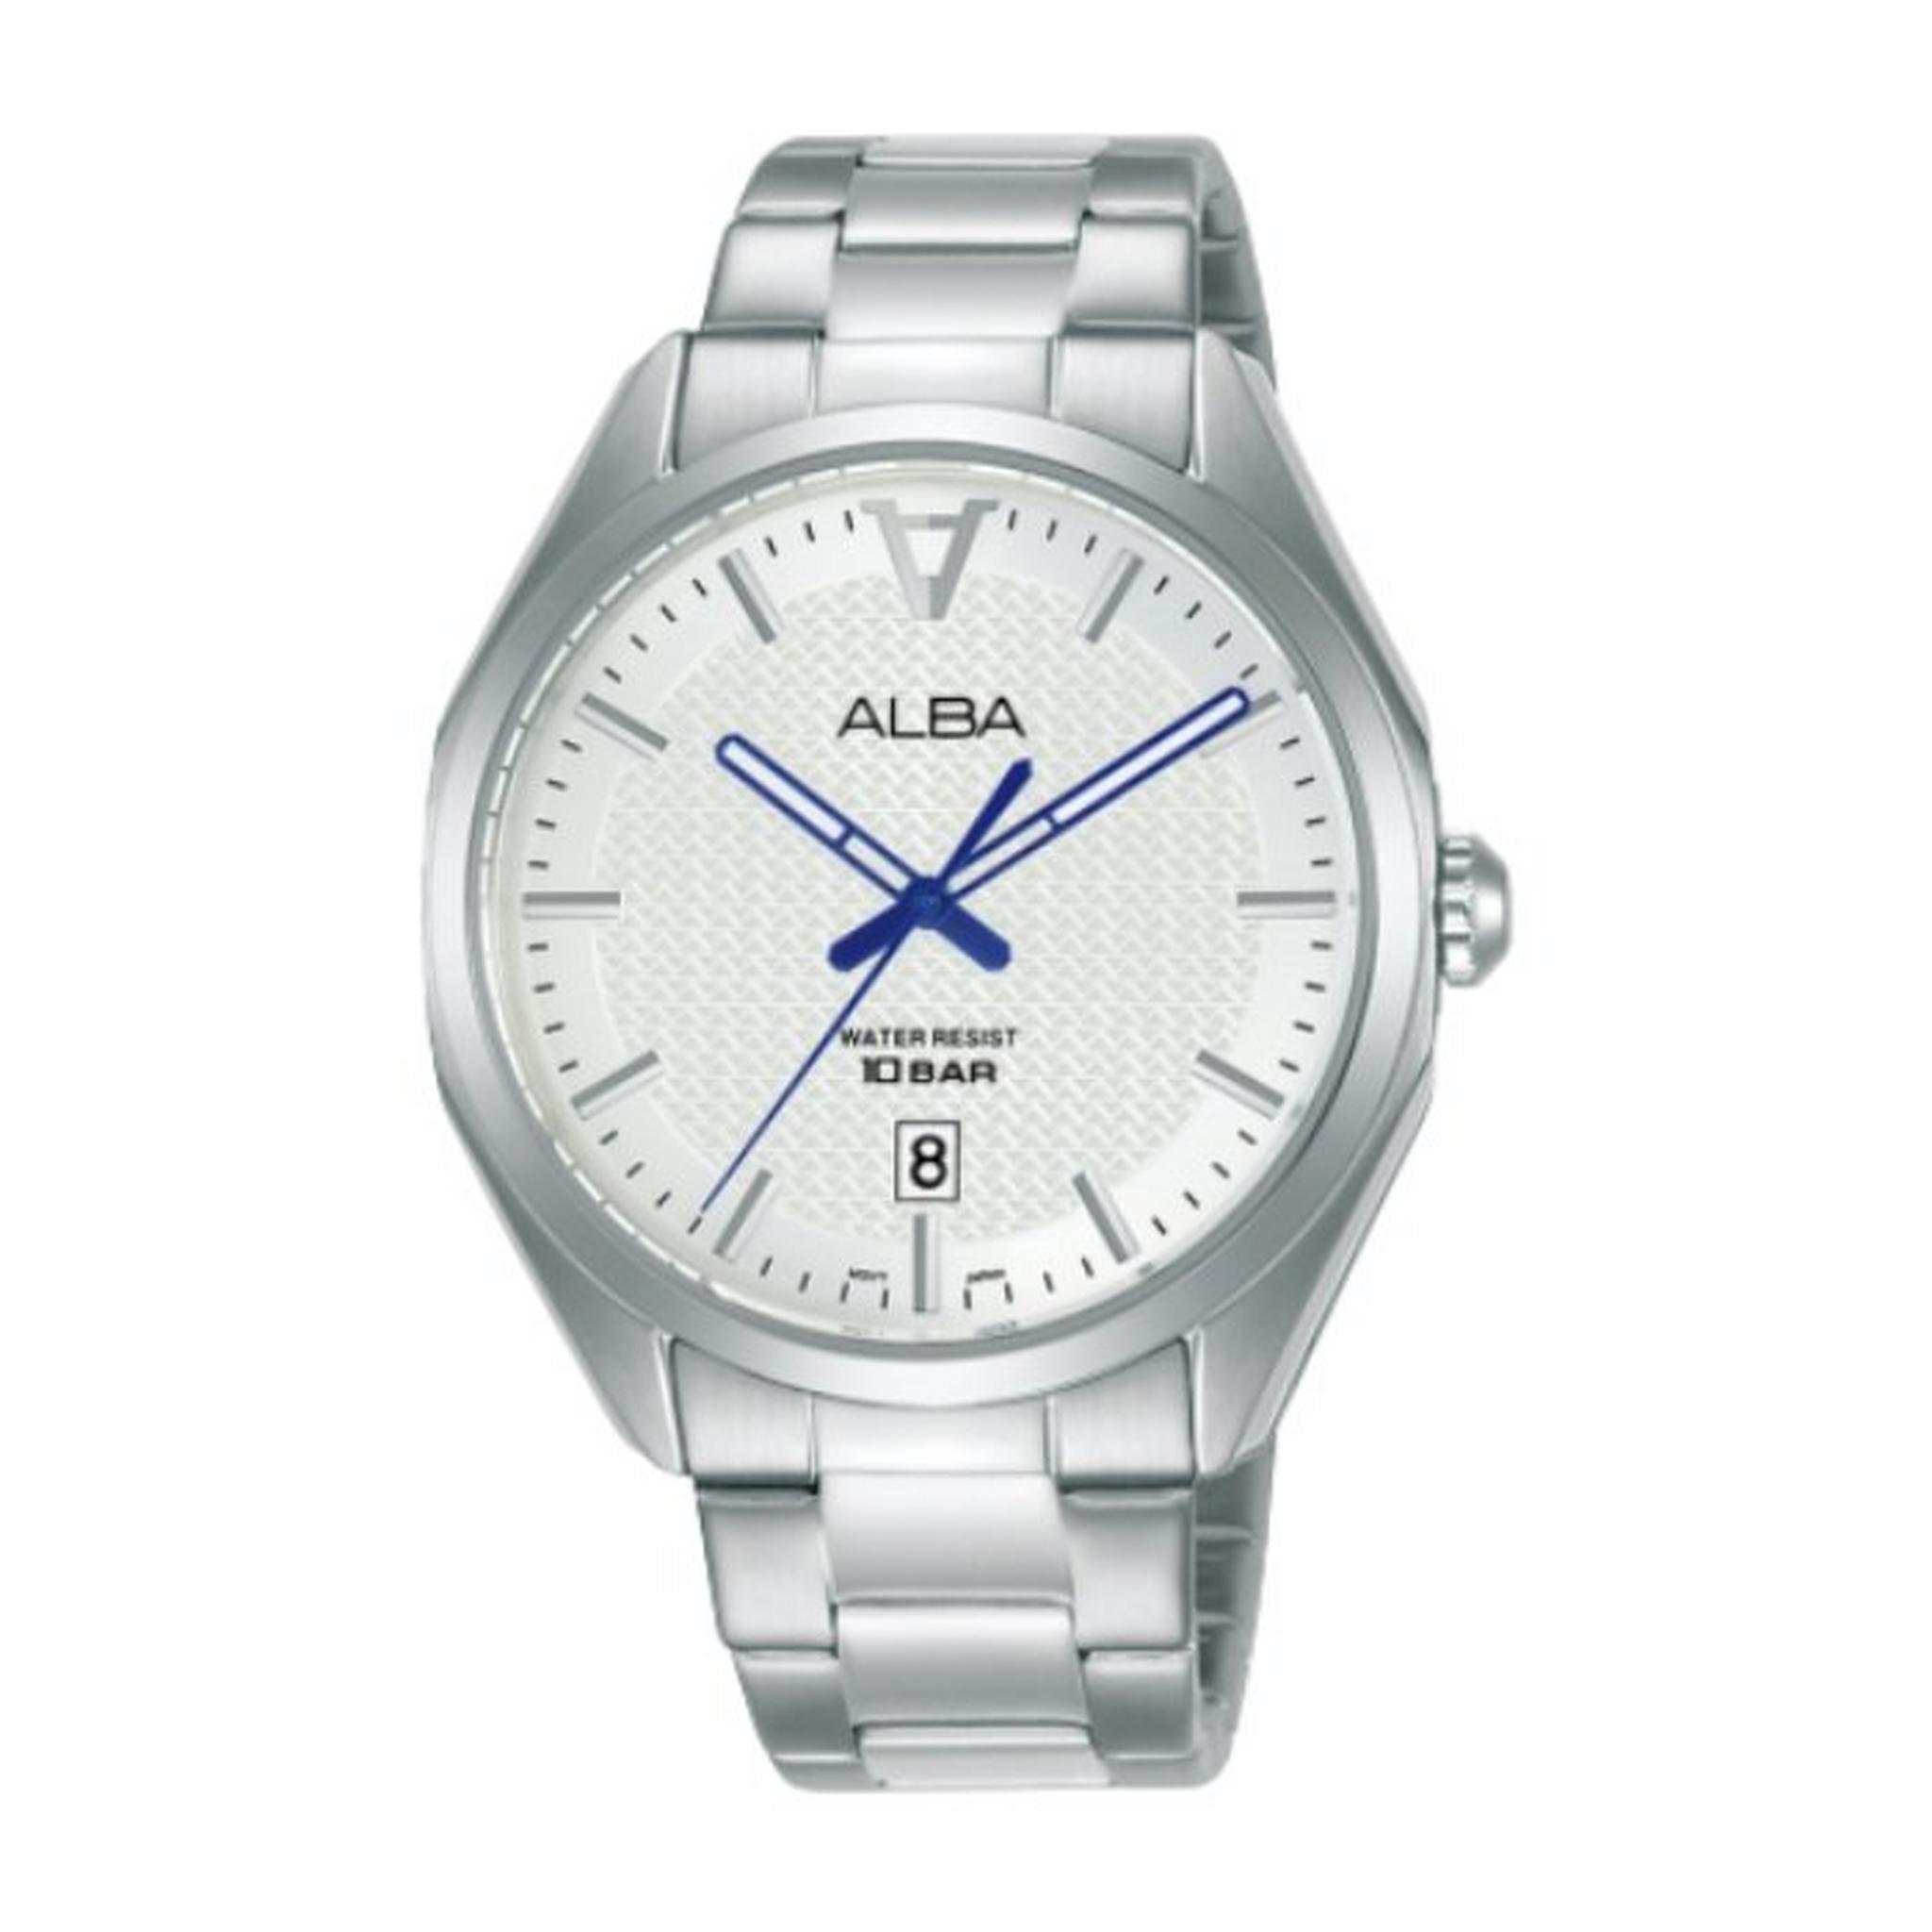 Alba 40mm Men's Analog Watch (AS9K75X1)